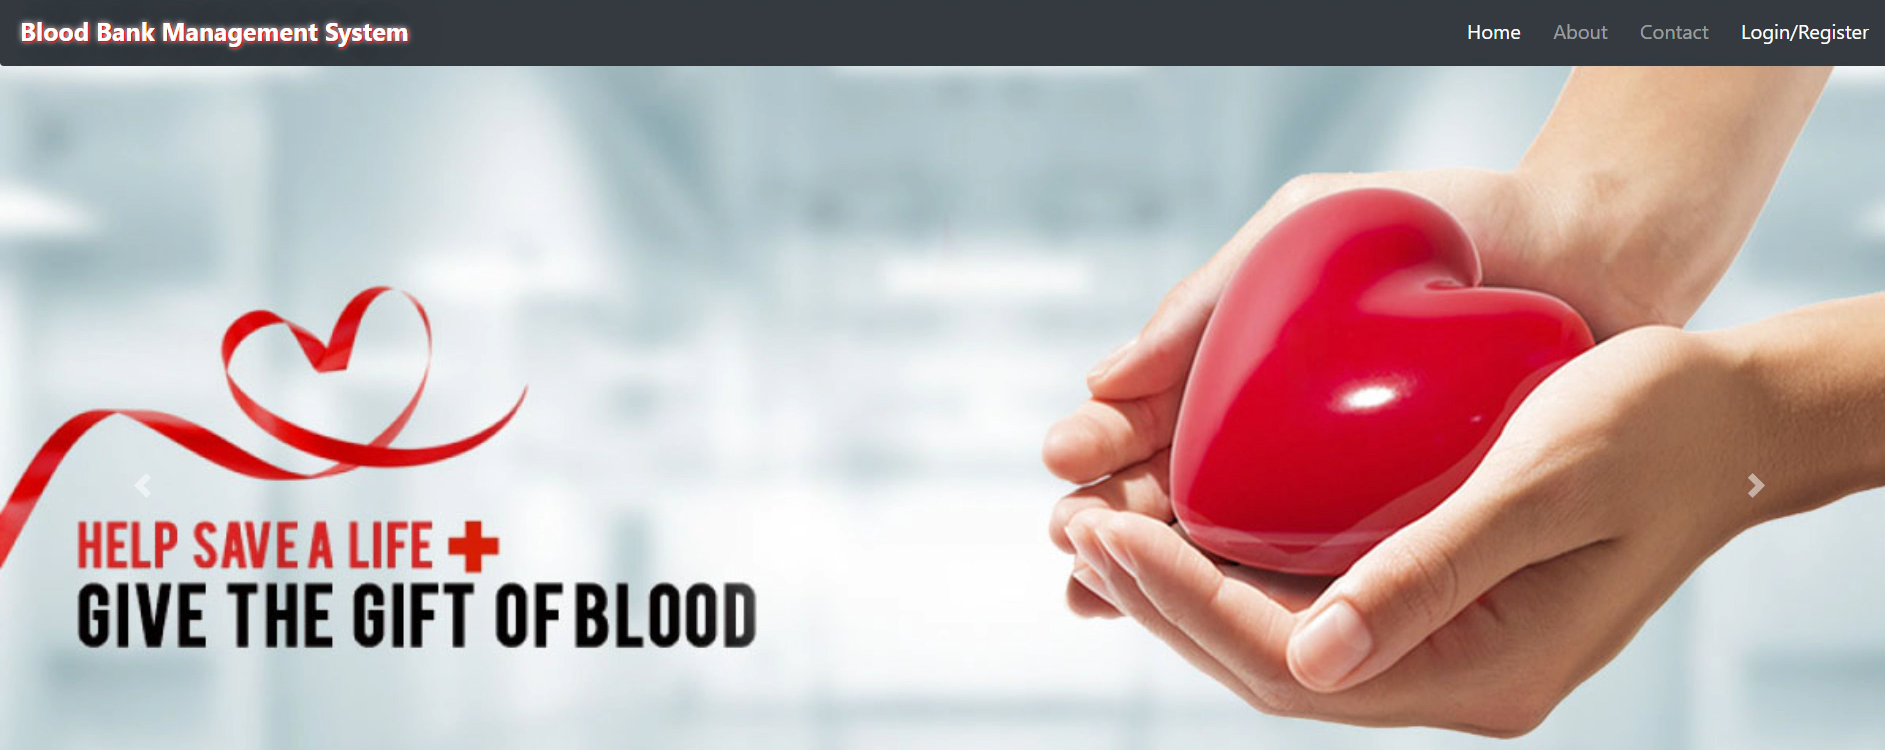 Blood Bank Management System Boosts Efficiency